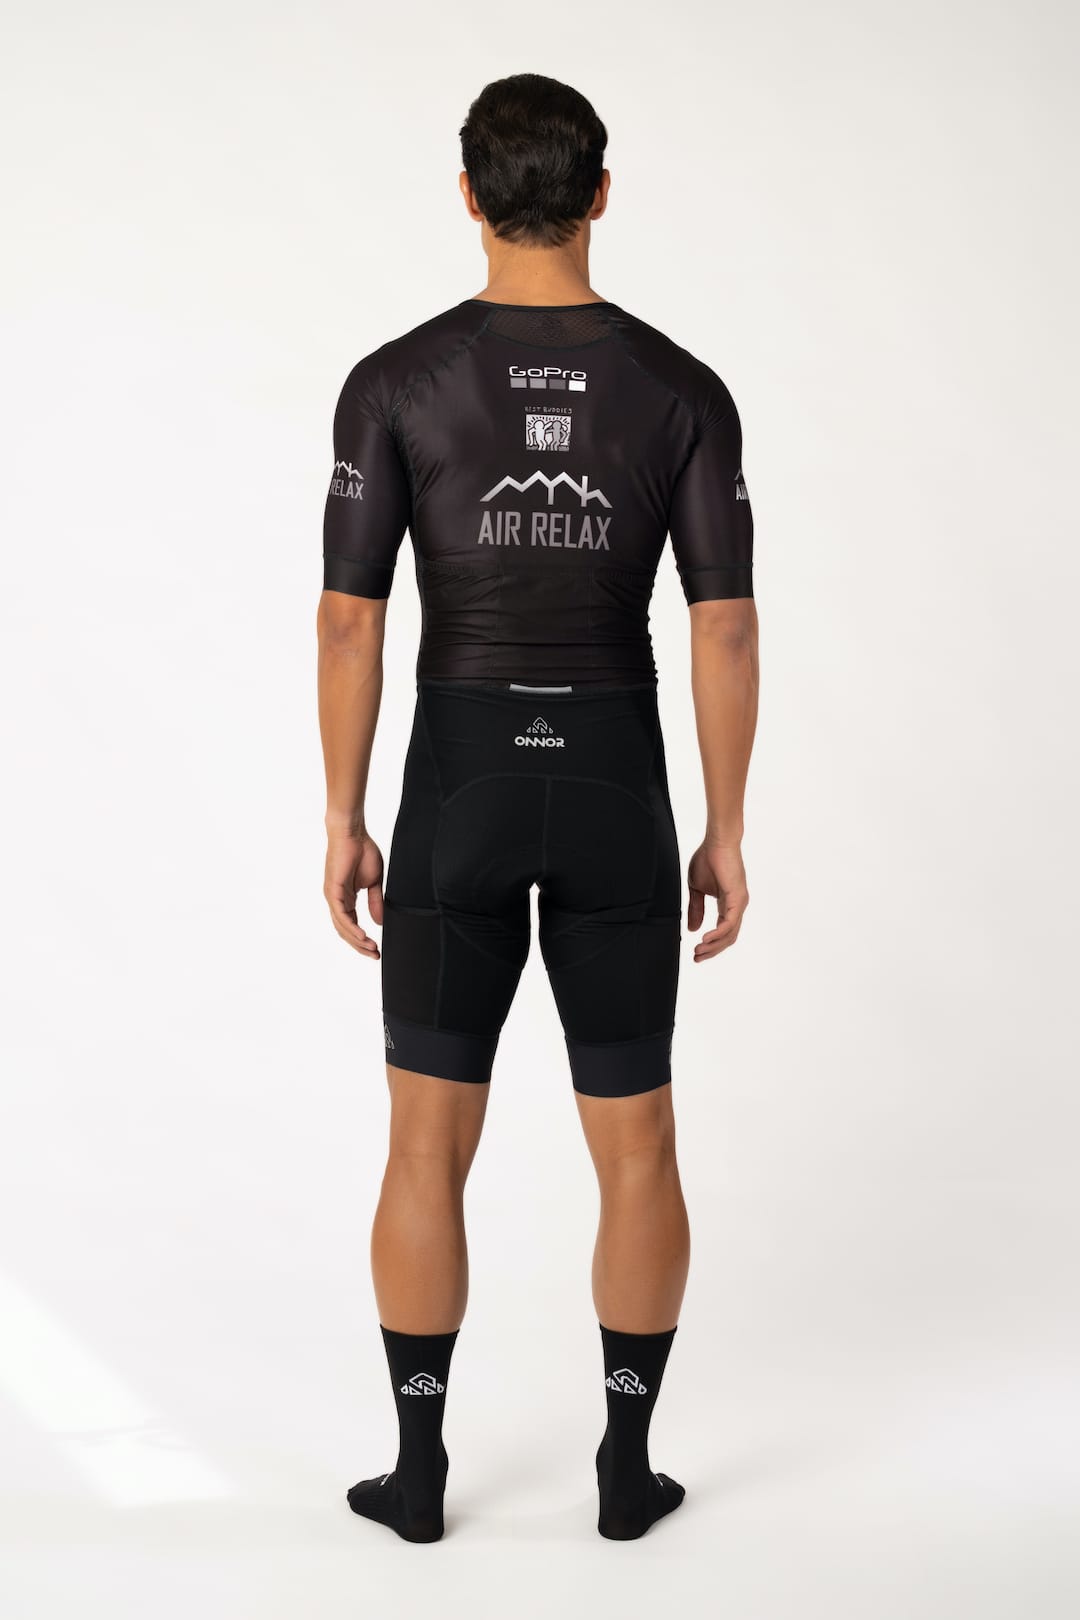 shop customized cycling jersey miami, custom biking jersey, custom cycling jersey no minimum order